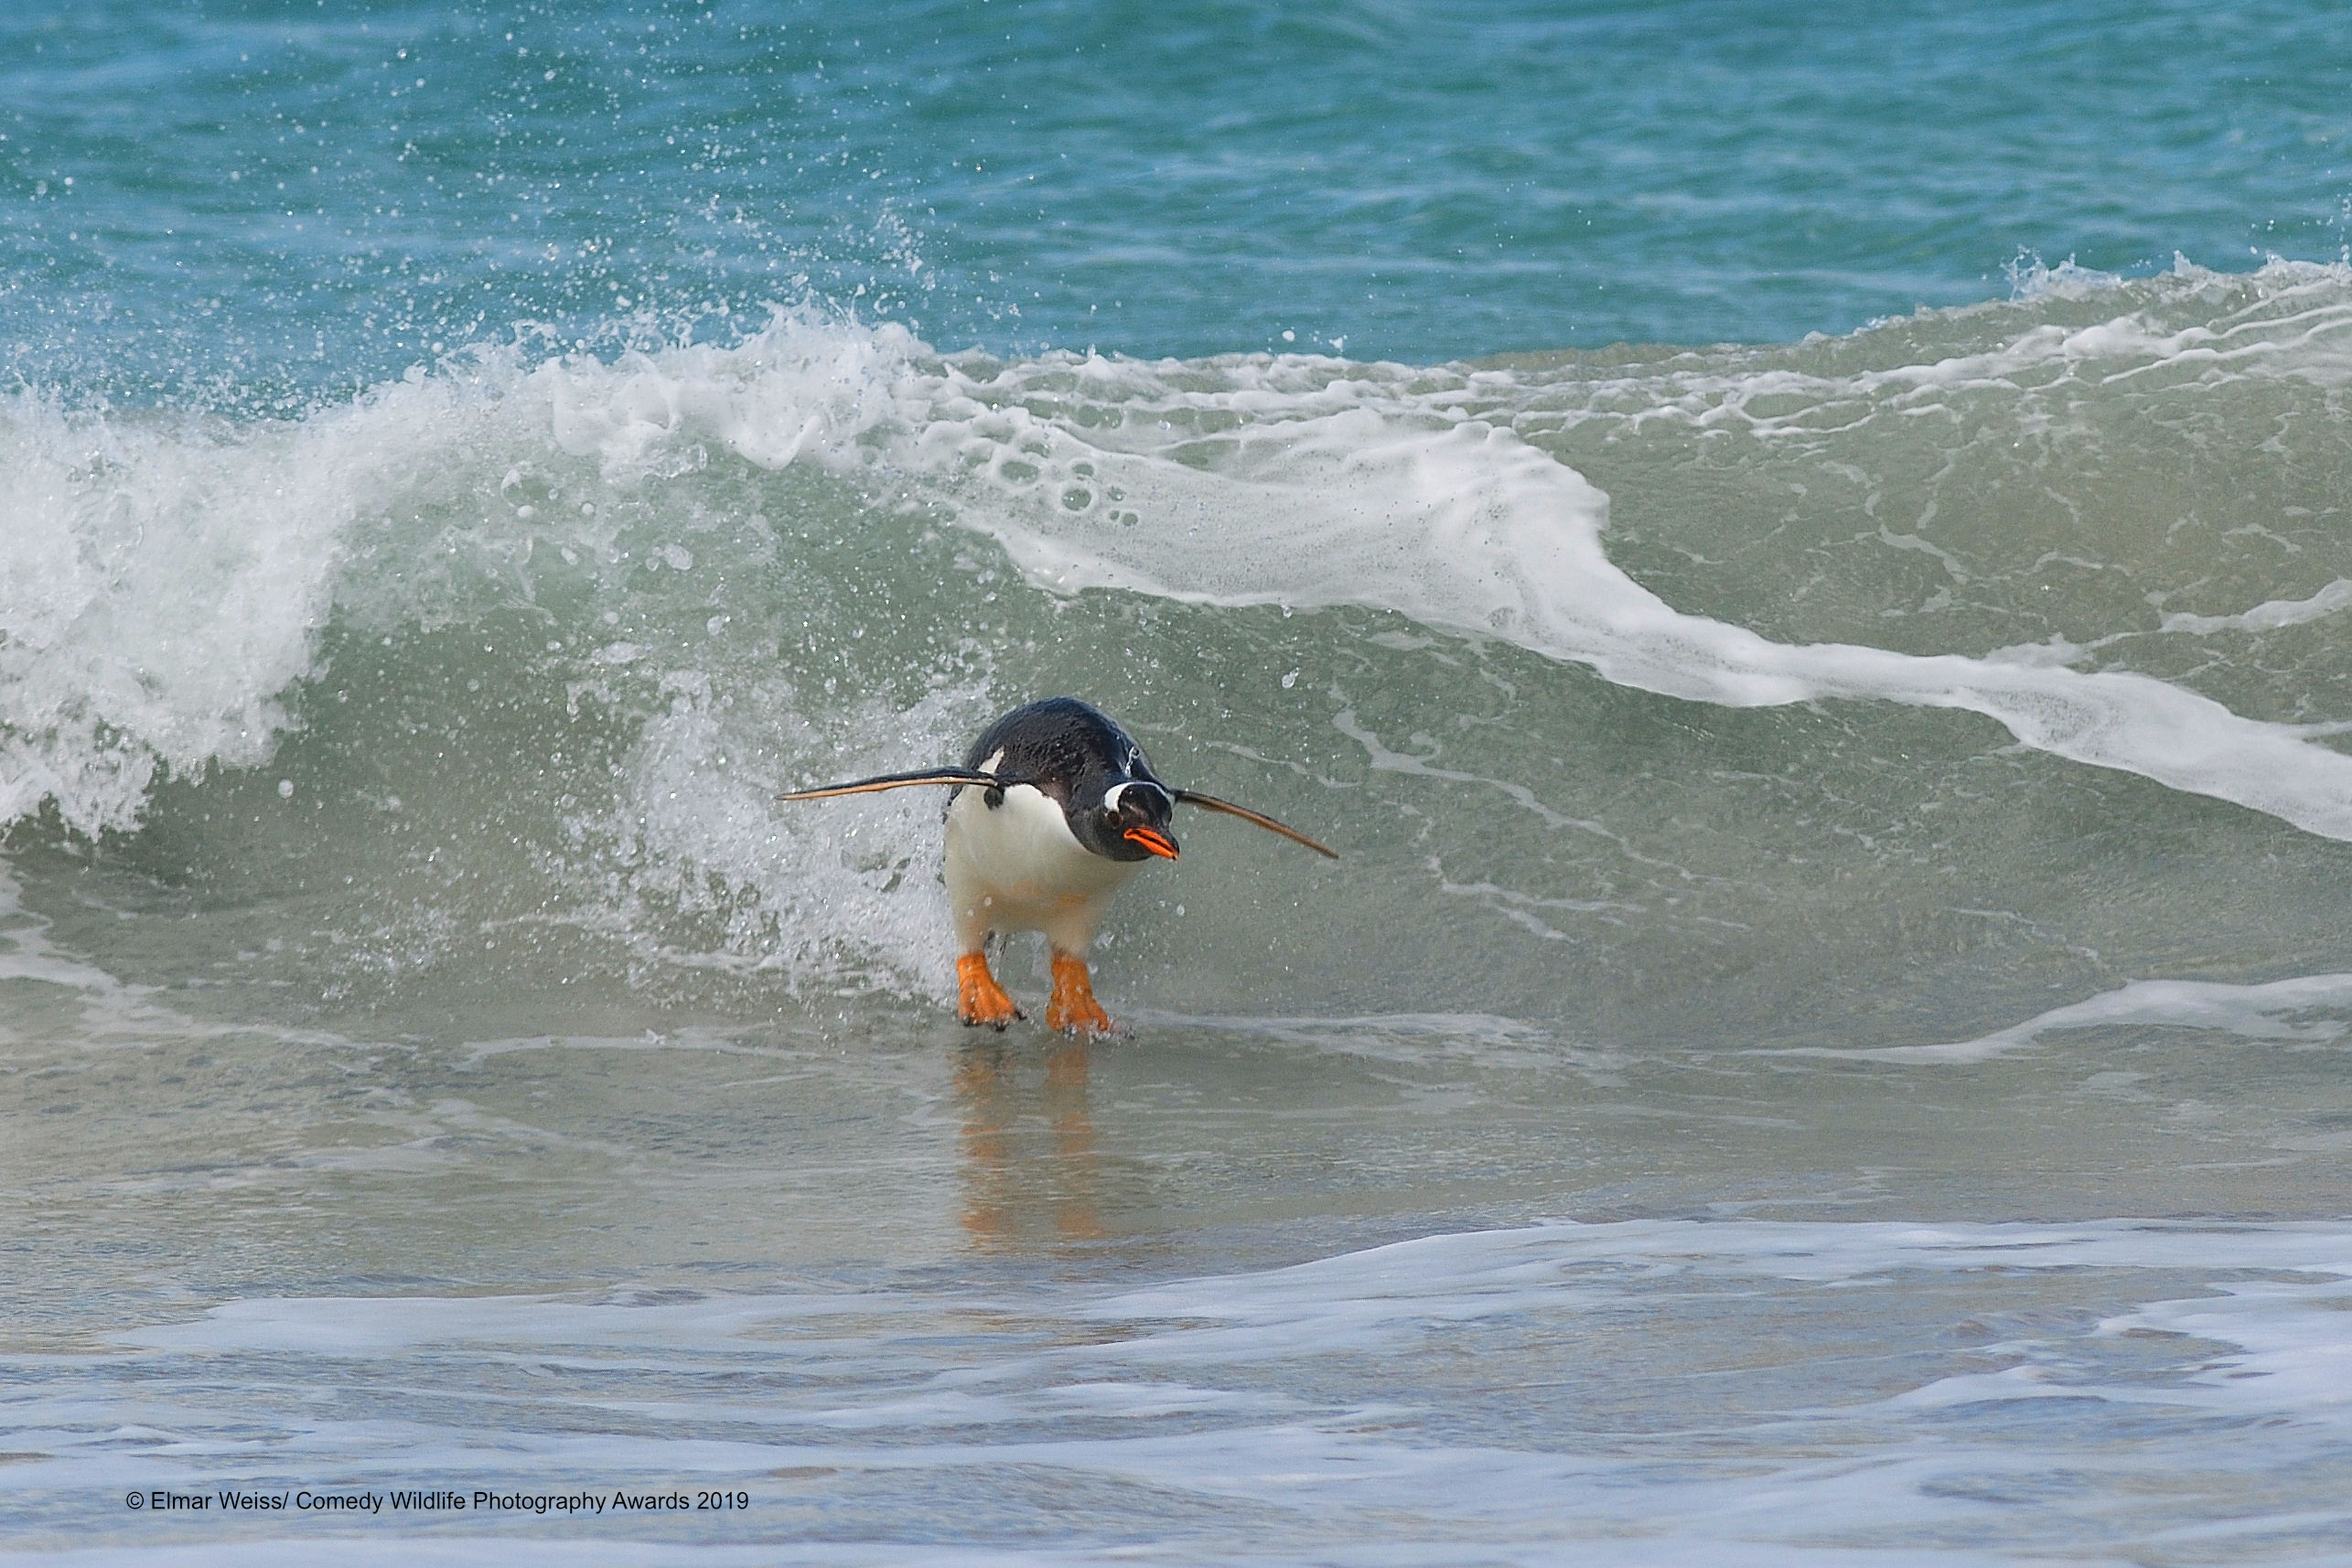 Pingvin surfa na Falklandskim otocima, snimio Elmar Weiss
